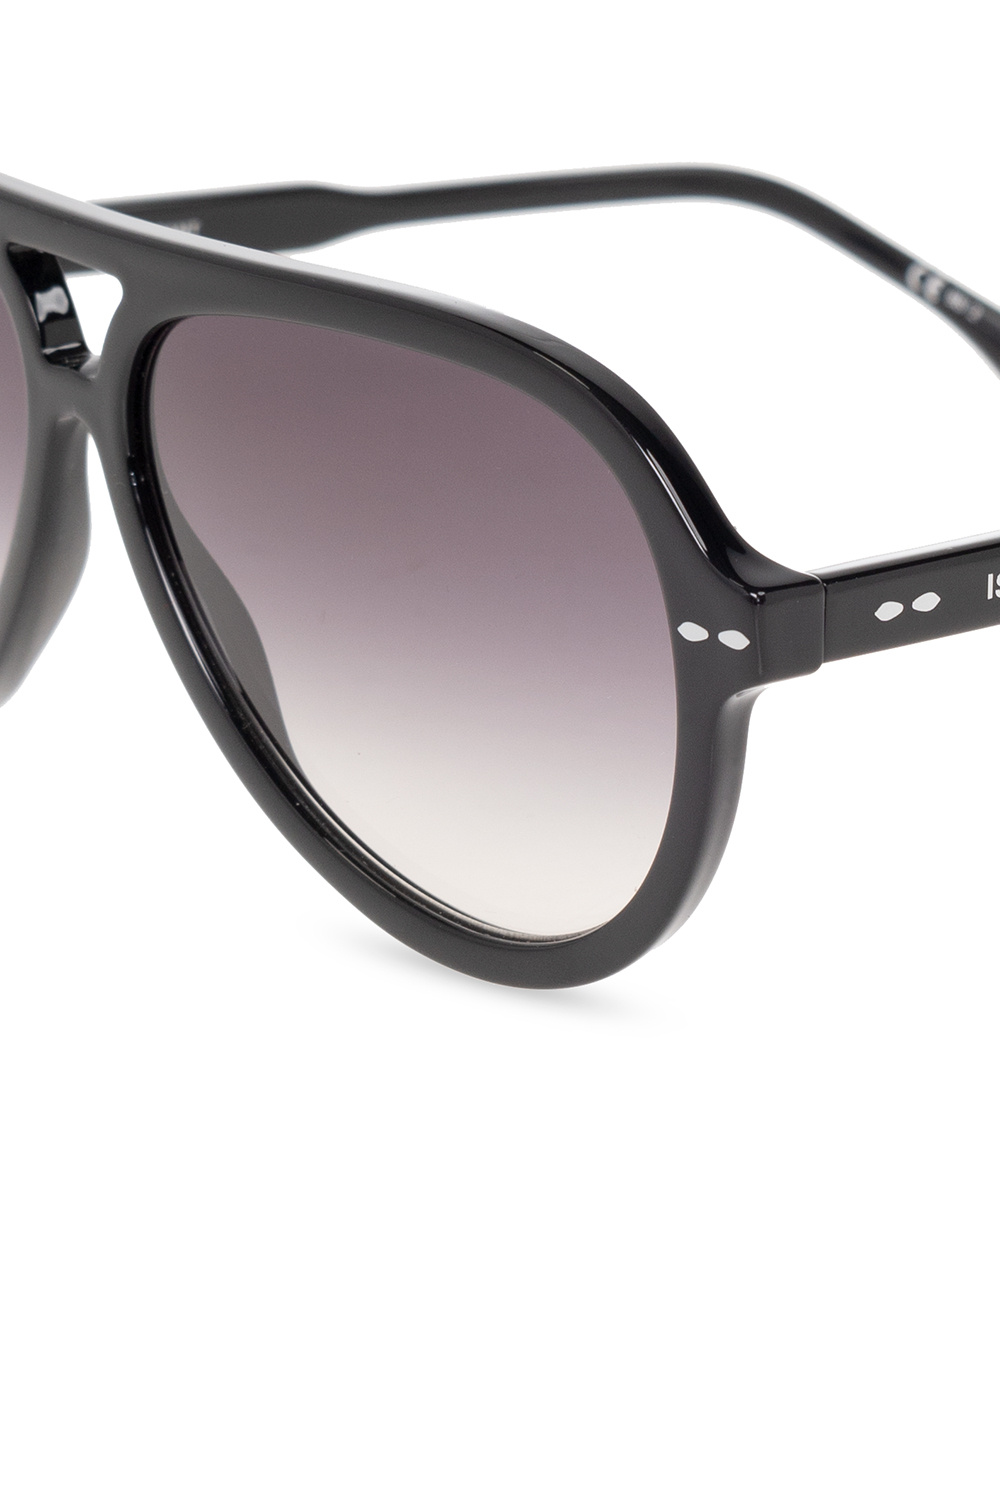 Isabel Marant rudy project spinshield ergonomic sunglasses item